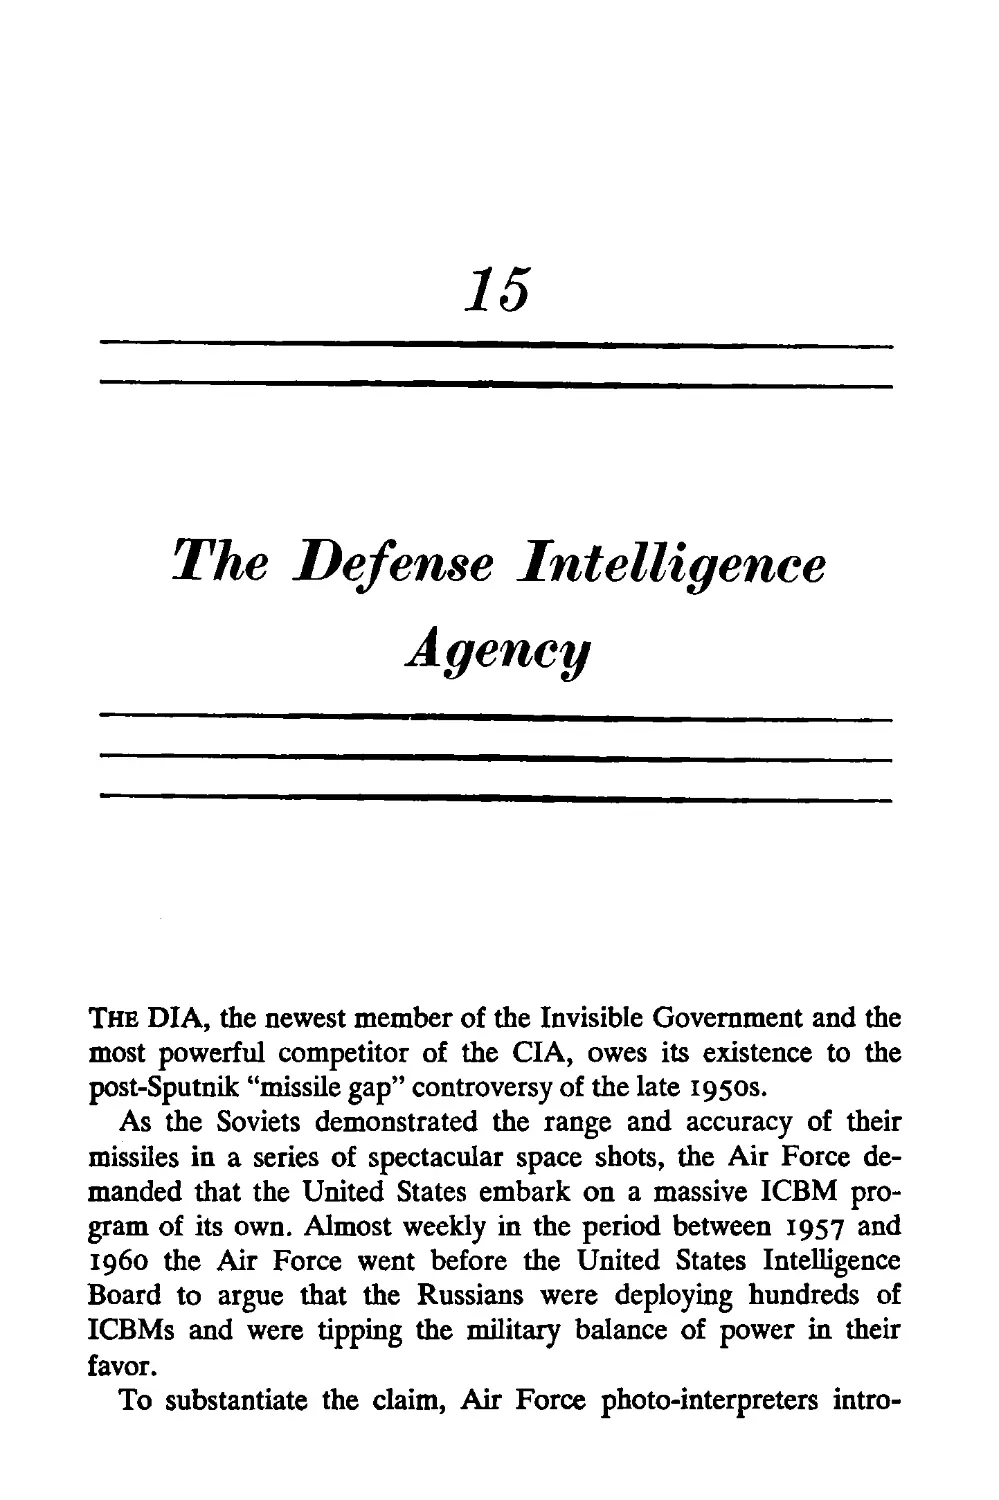 15. The Defense Intelligence Agency